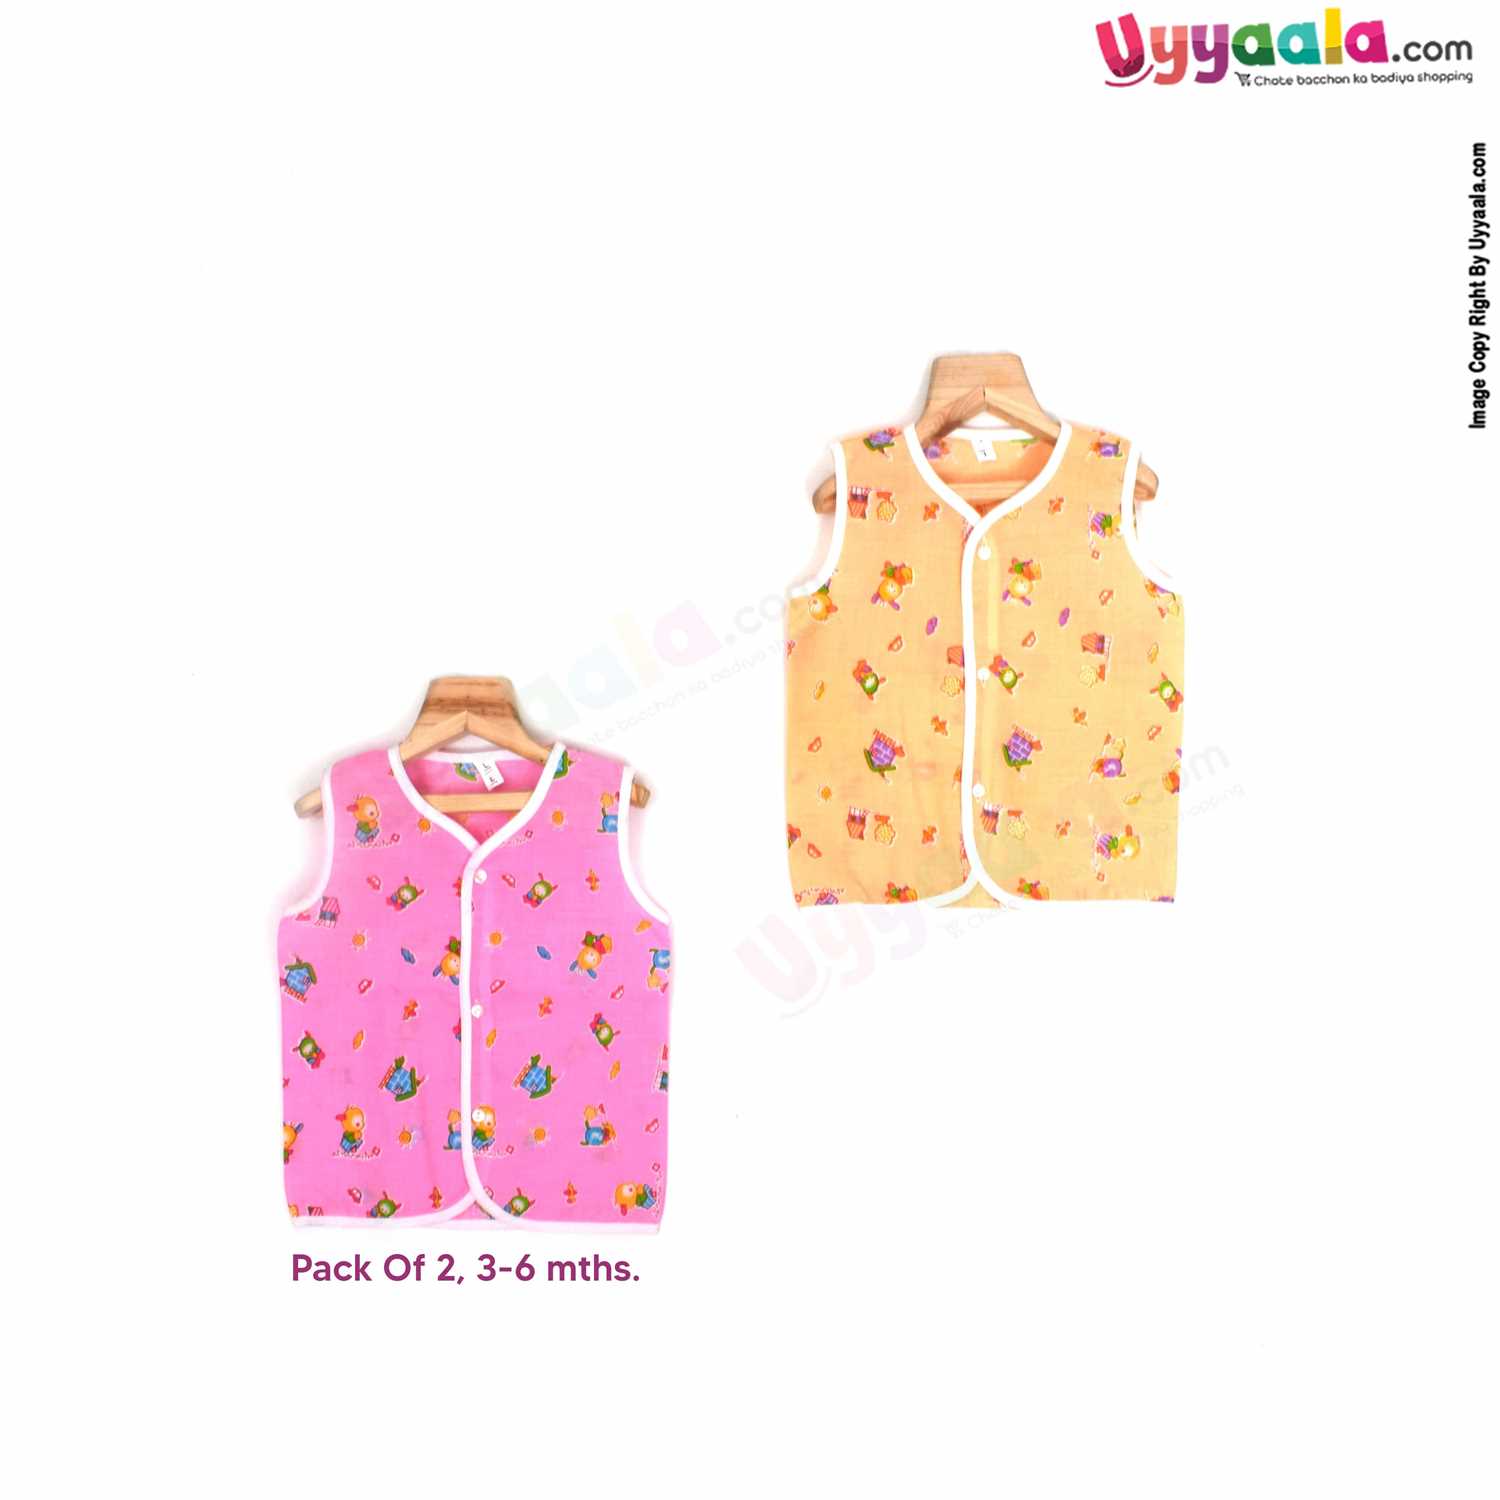 SNUG UP Sleeveless Baby Jabla Set, Front Opening Button Model, Premium Quality Cotton Baby Wear, Bear Print, (3-6M), 2Pack - Pink & Orange